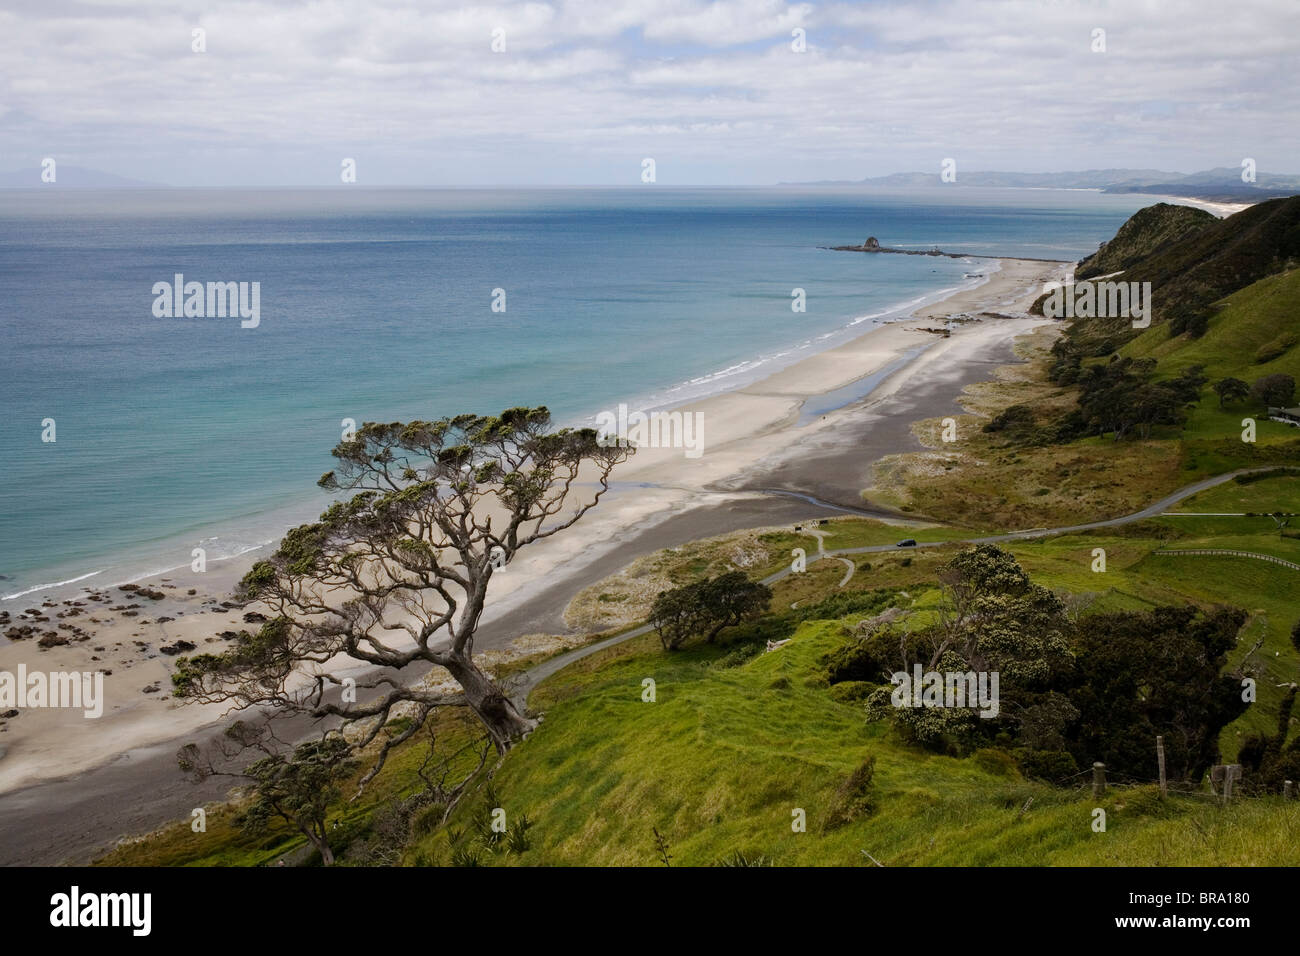 The beach at Mangawhai Heads on the east coast of New Zealand's North Island. Stock Photo